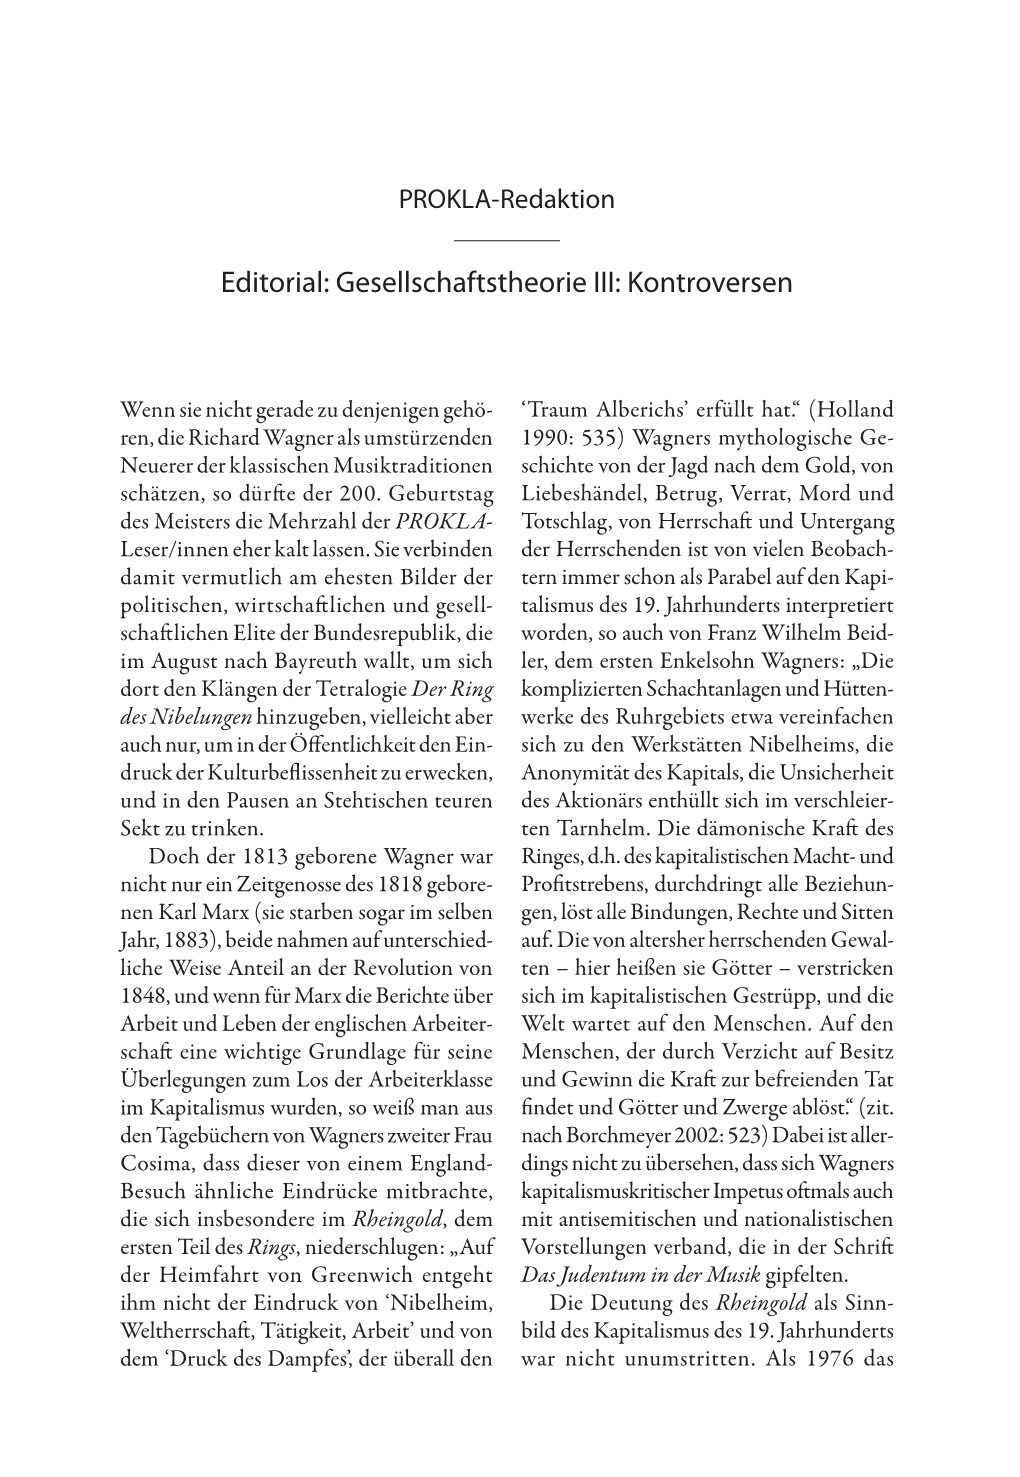 Editorial: Gesellschaftstheorie III: Kontroversen